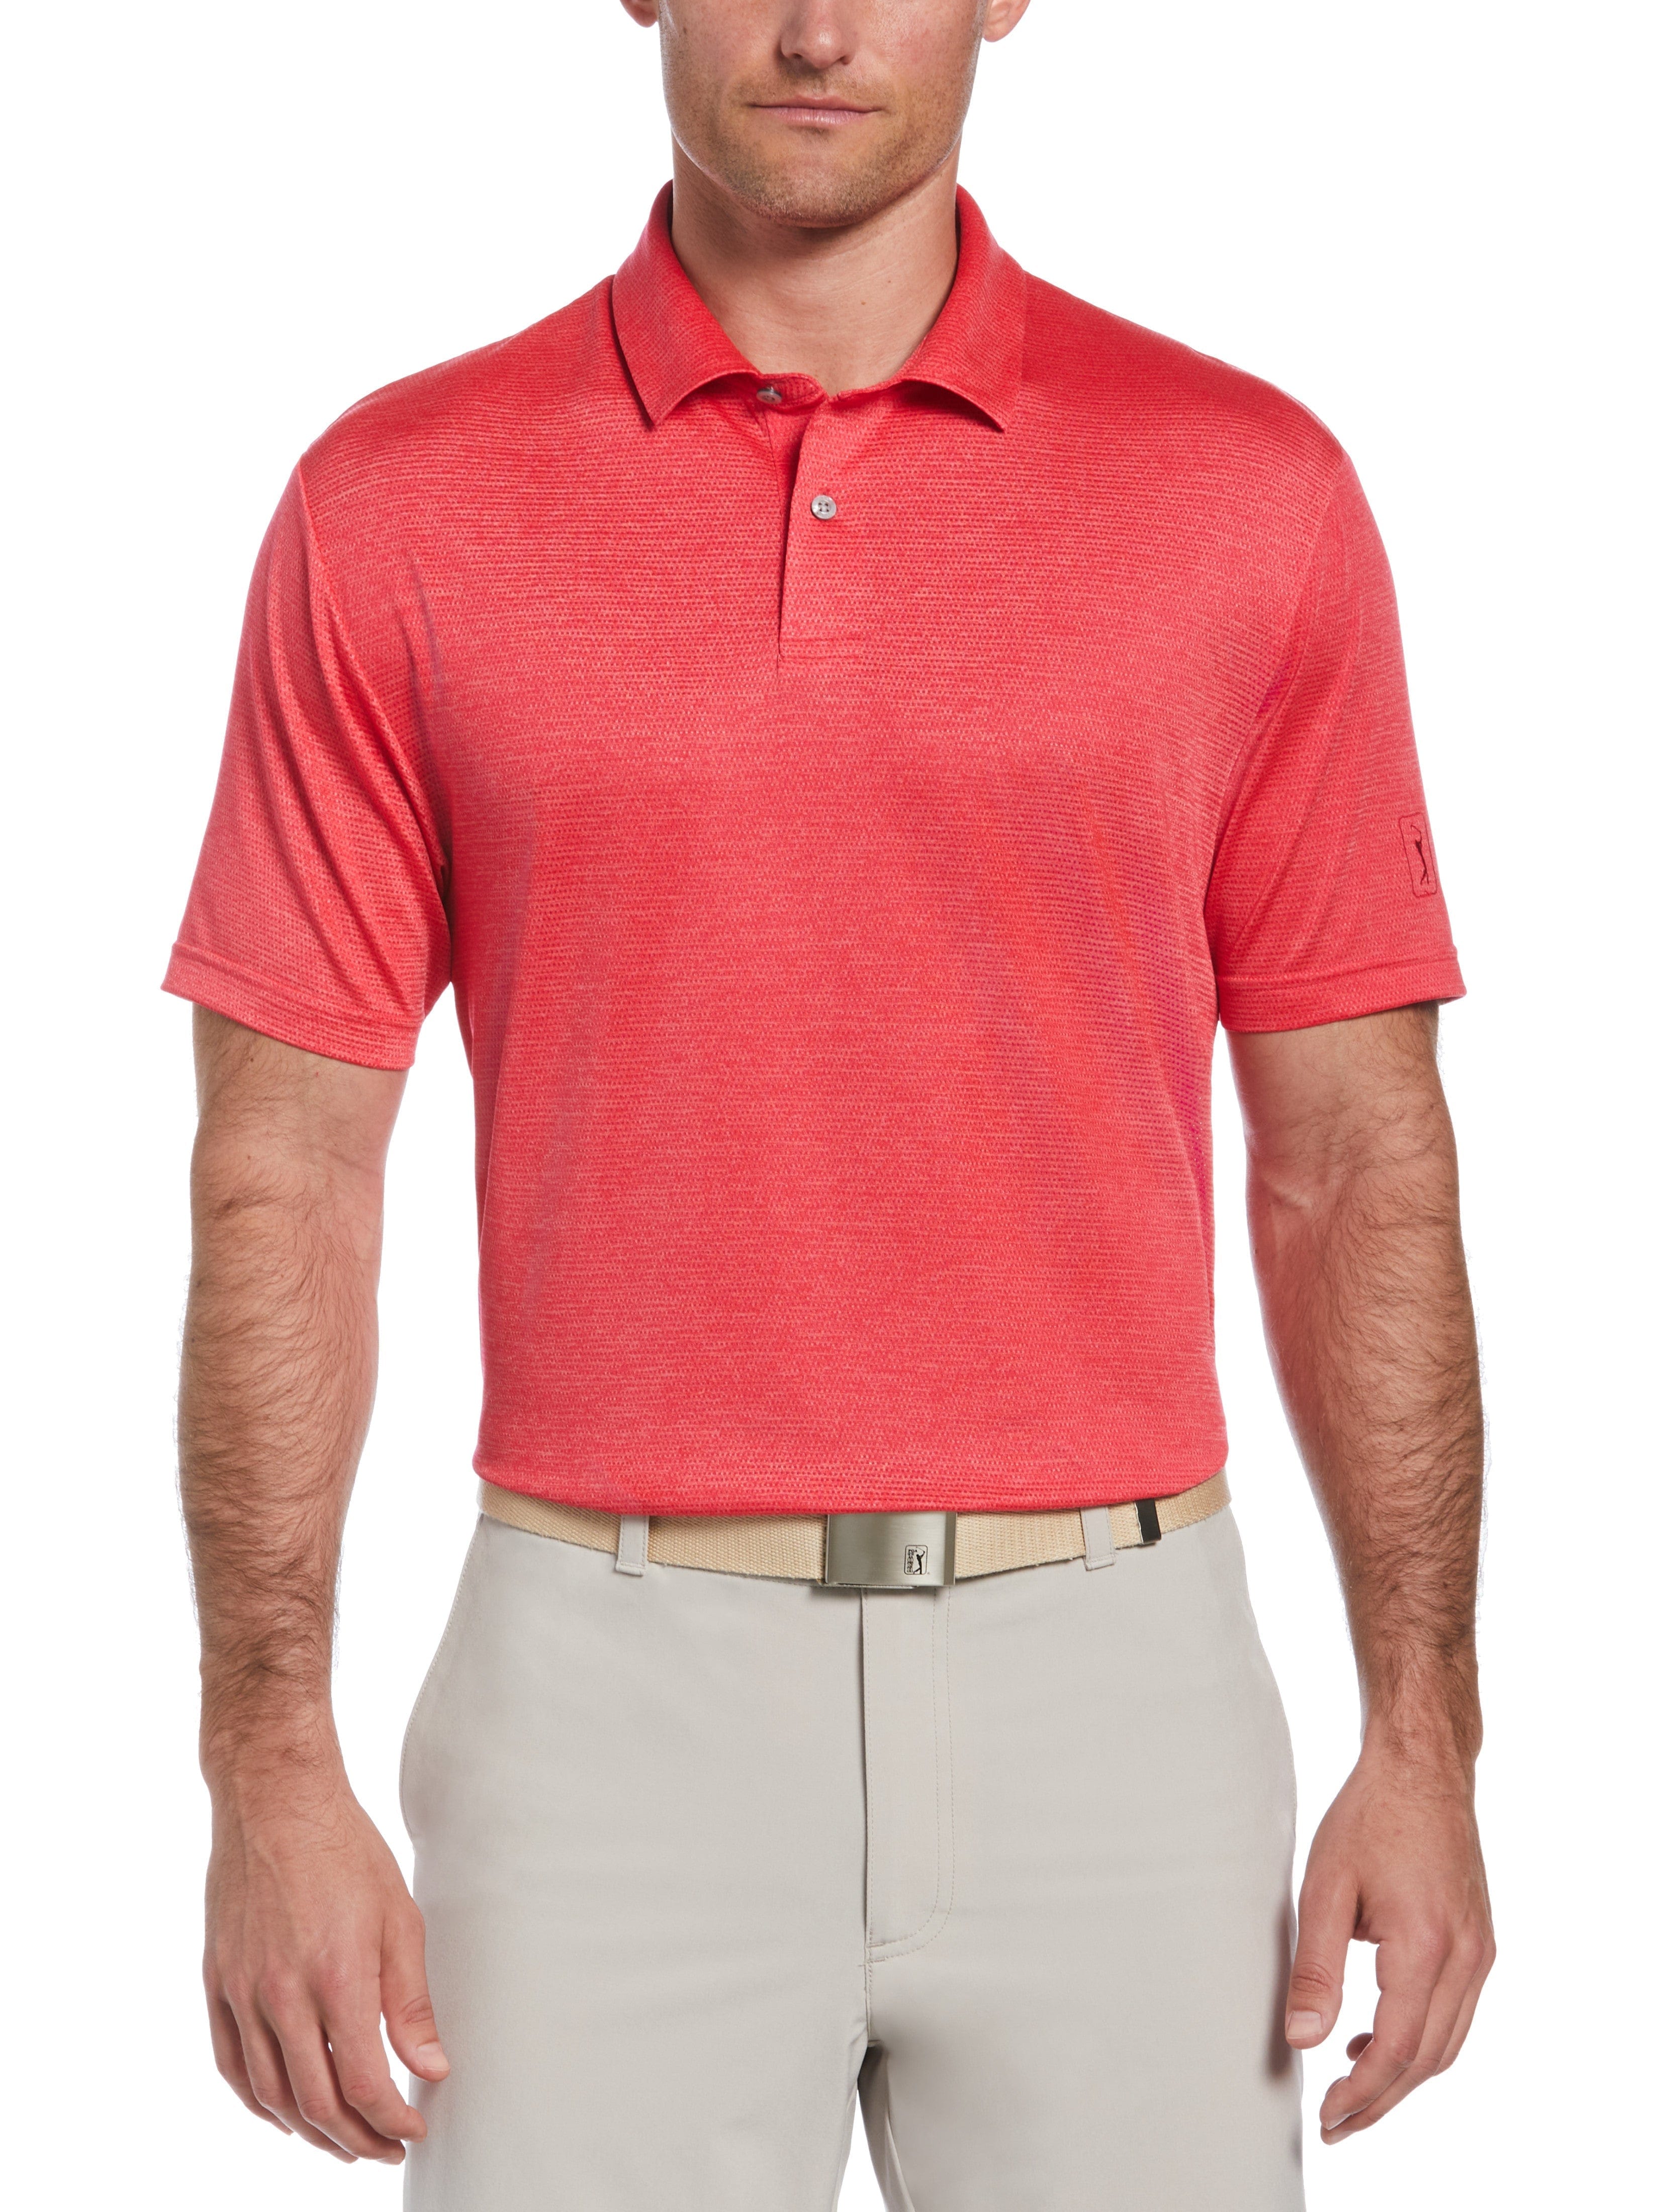 PGA TOUR Apparel Mens Space Dye Texture Golf Polo Shirt, Size Large, Virtual Pink Heather, 100% Polyester | Golf Apparel Shop